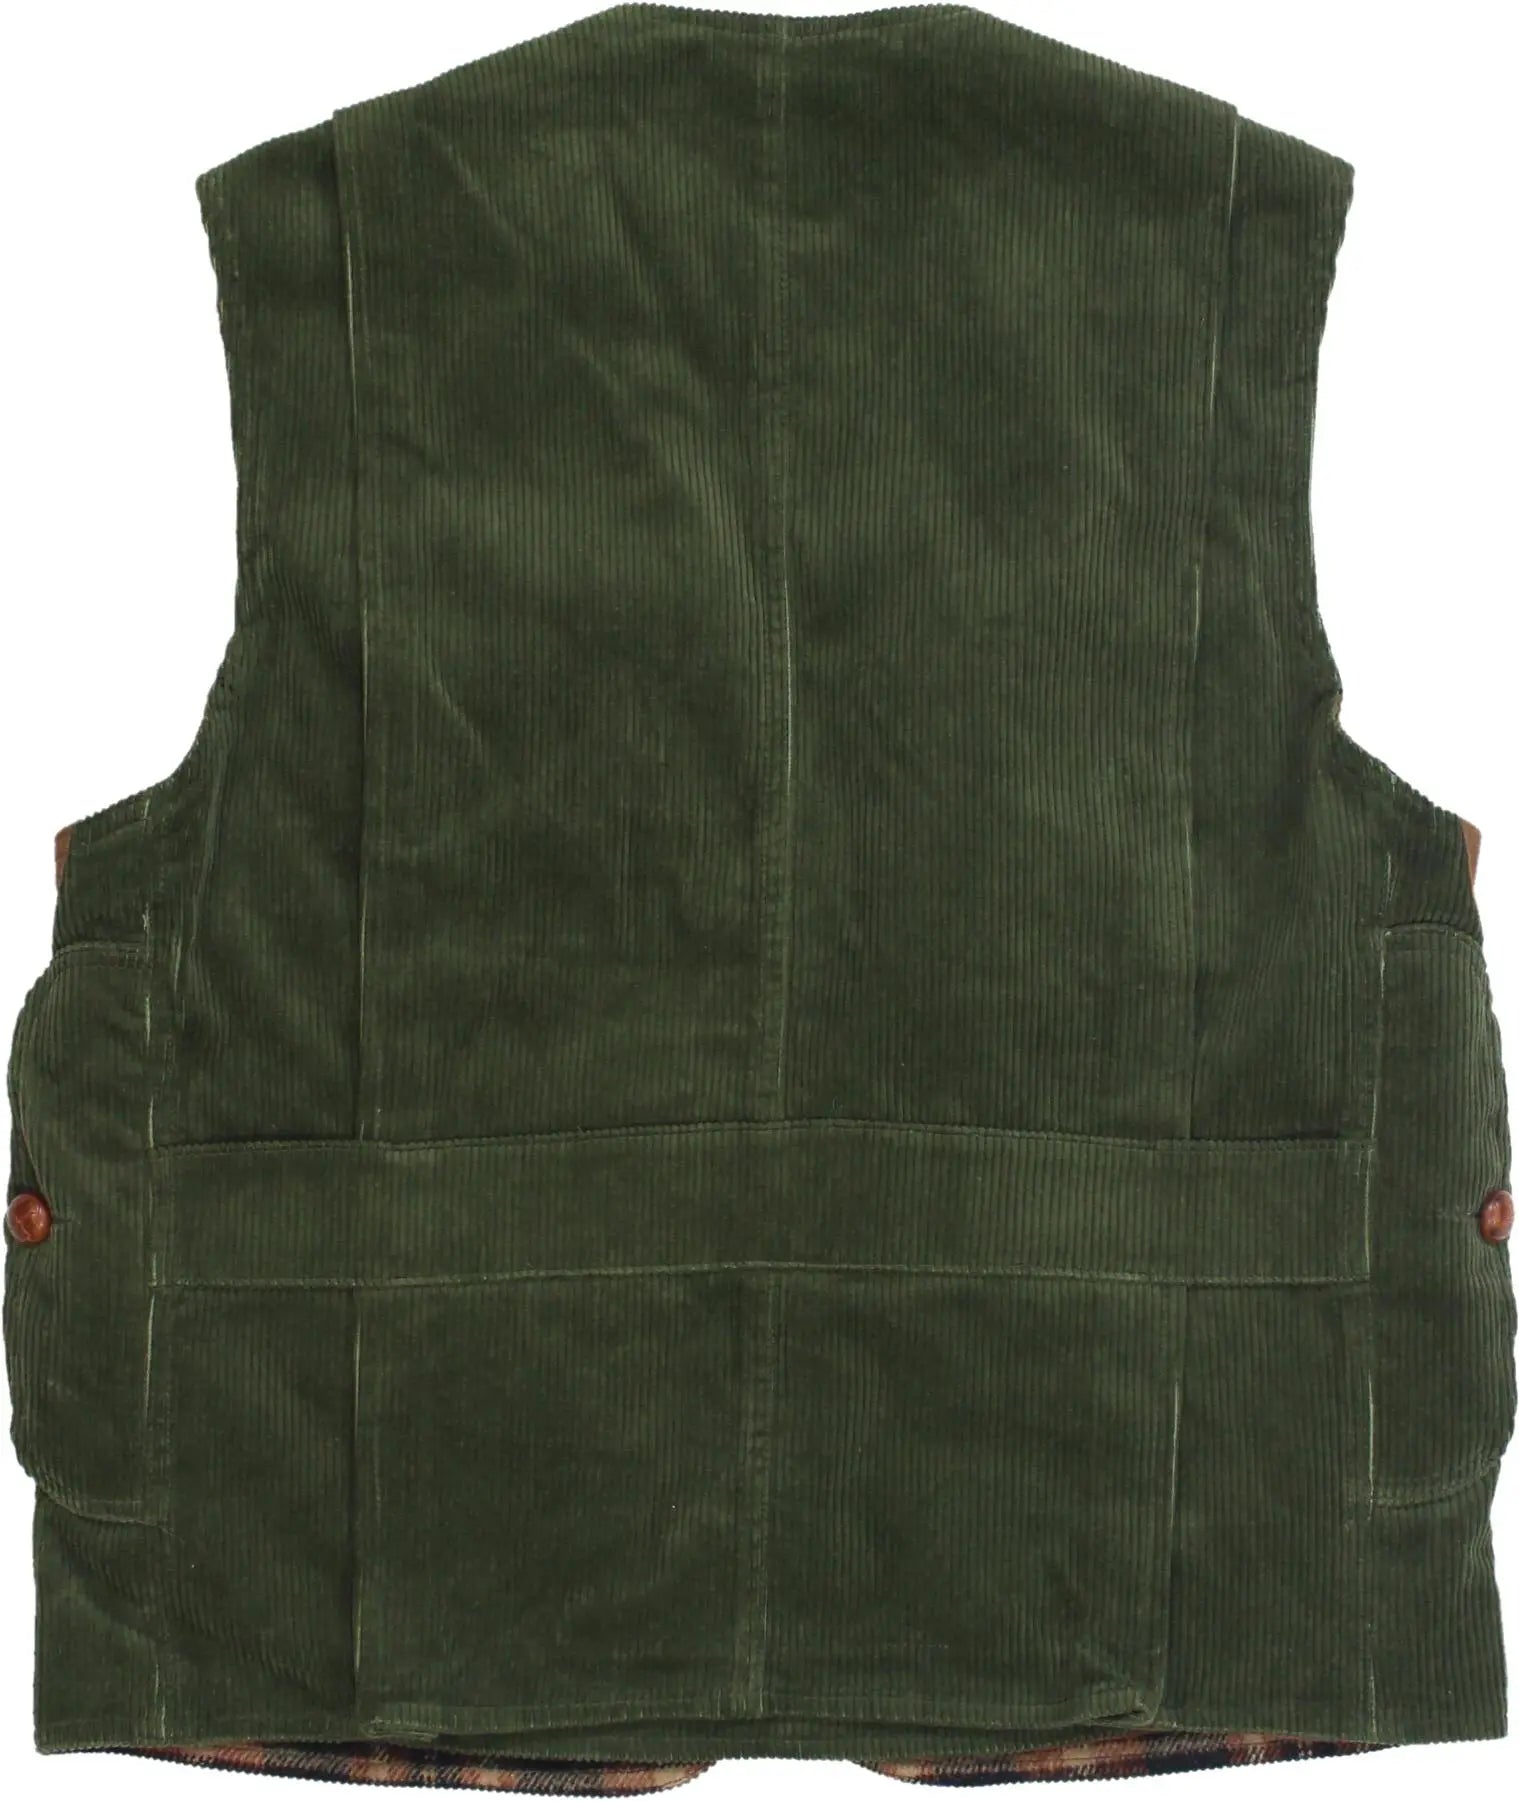 Blackwood - Vintage Sleeveless Corduroy Vest- ThriftTale.com - Vintage and second handclothing